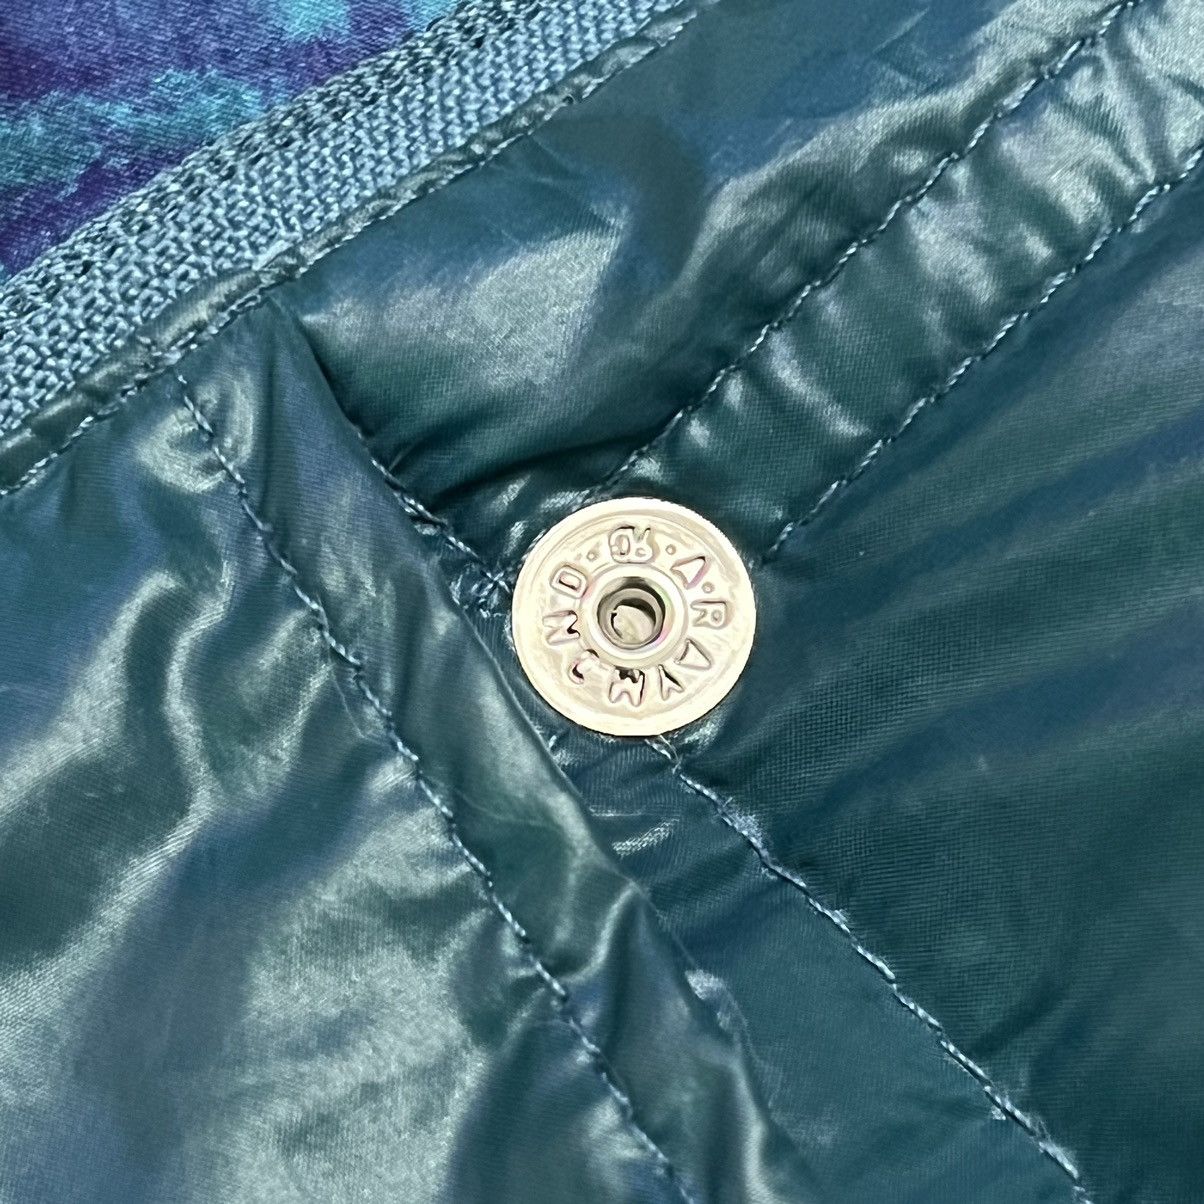 Moncler Moncler Grenoble rare vintage down jacket Size US M / EU 48-50 / 2 - 13 Thumbnail